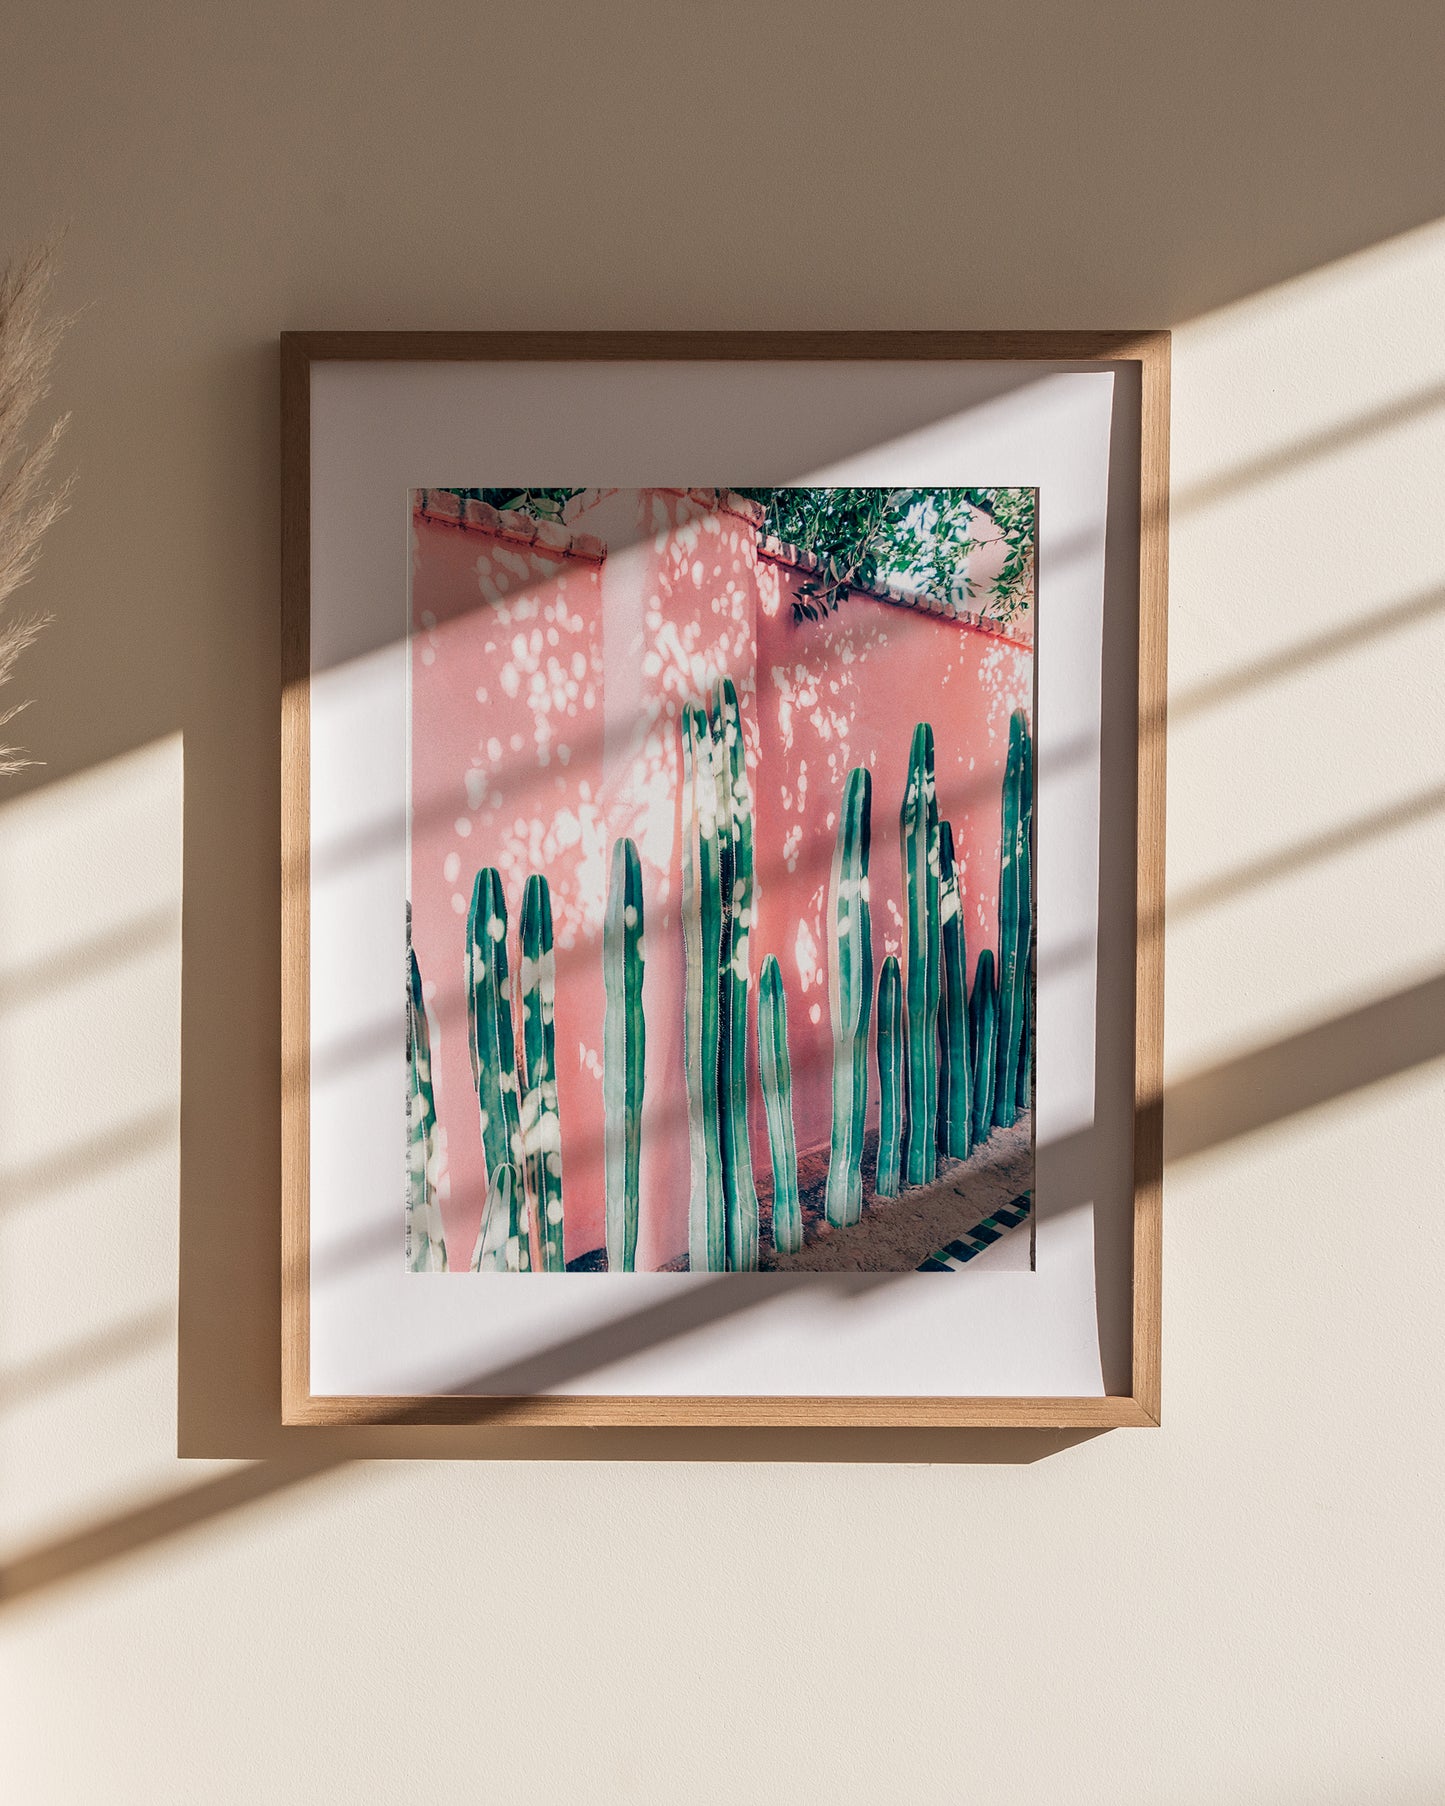 Pink Cactus Print